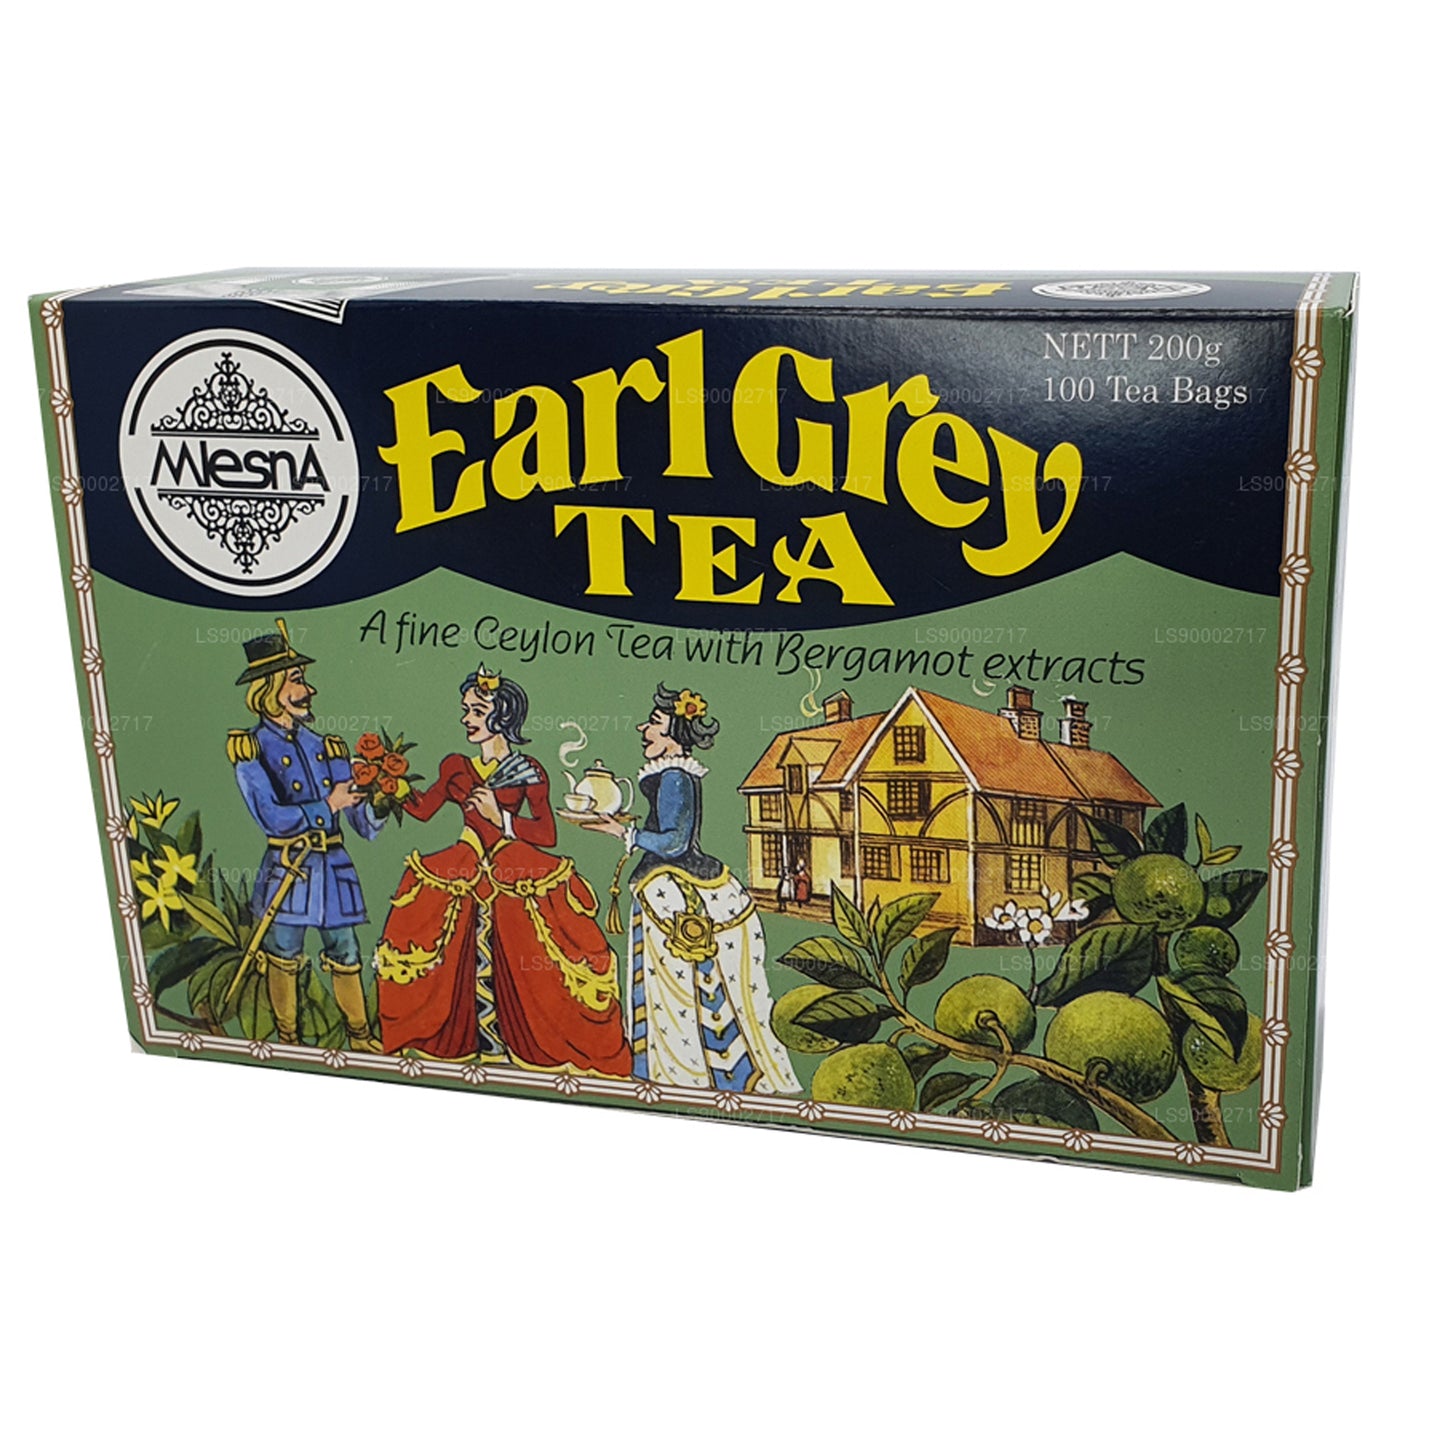 Mlesna Earl Grey Tea Bags